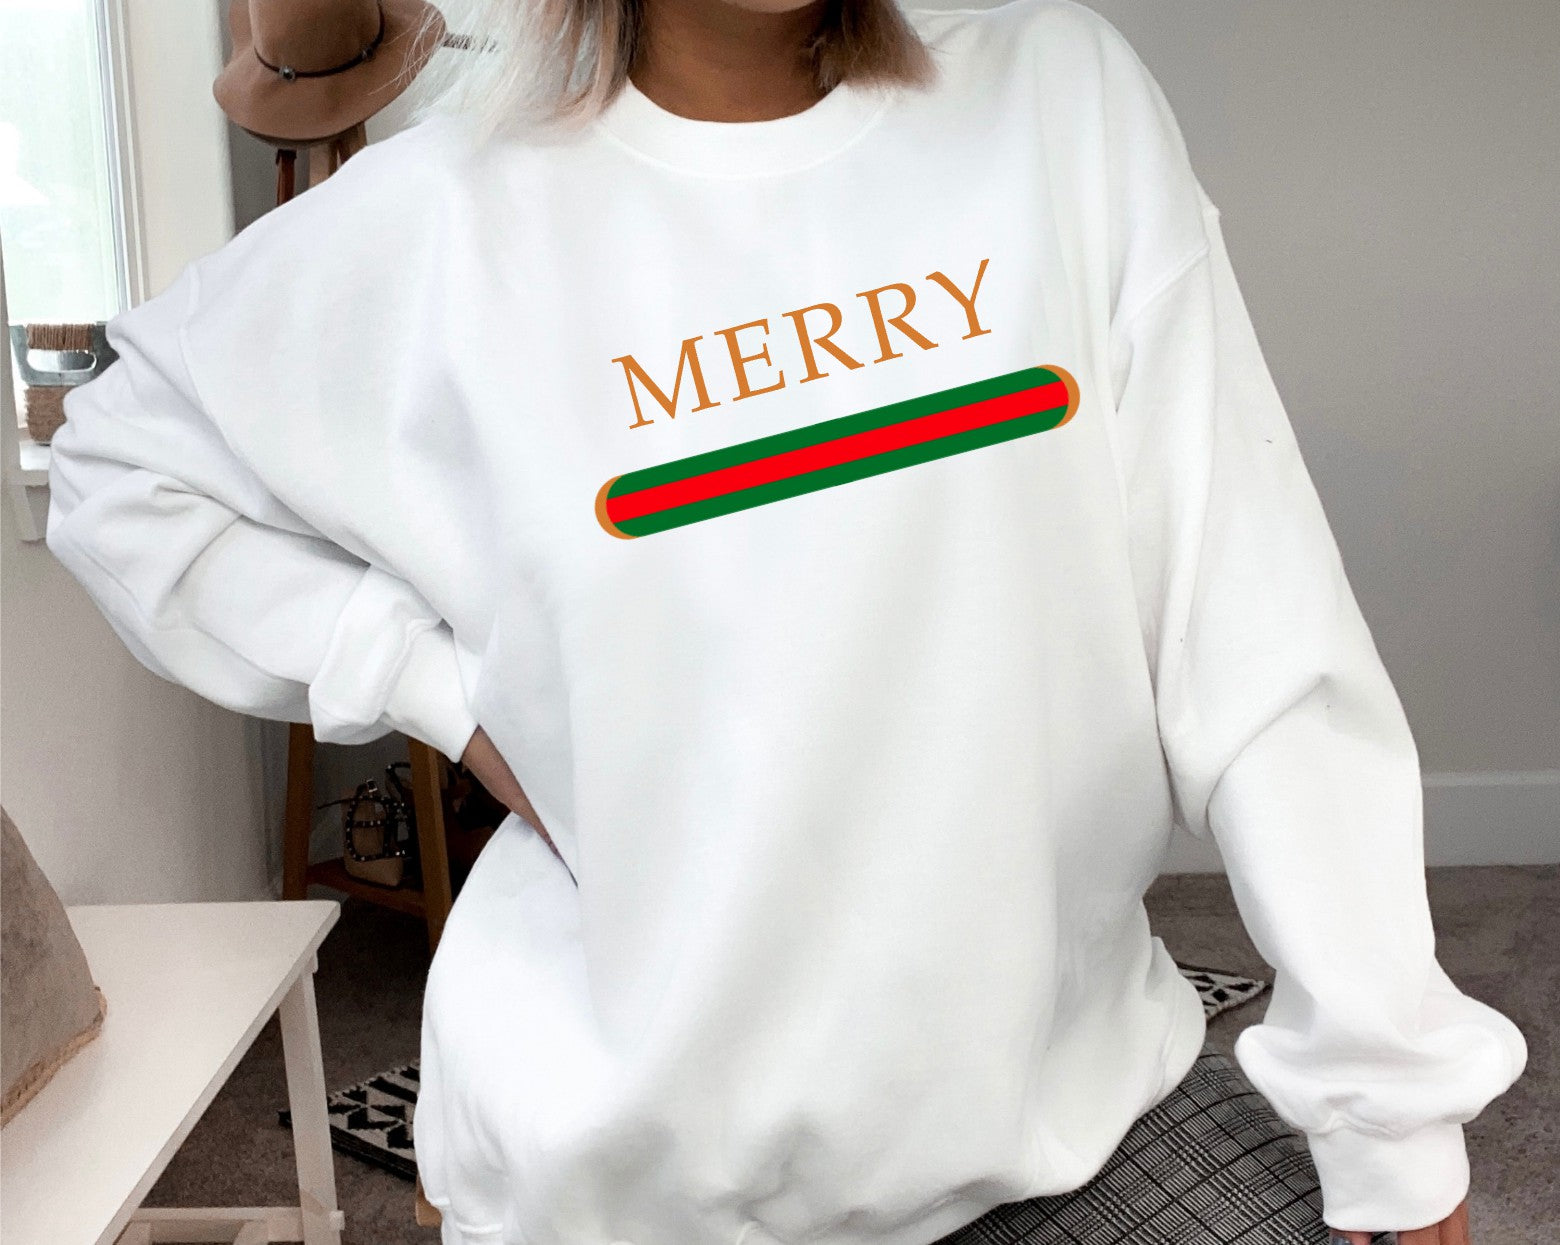 Fashionista Merry Sweatshirt